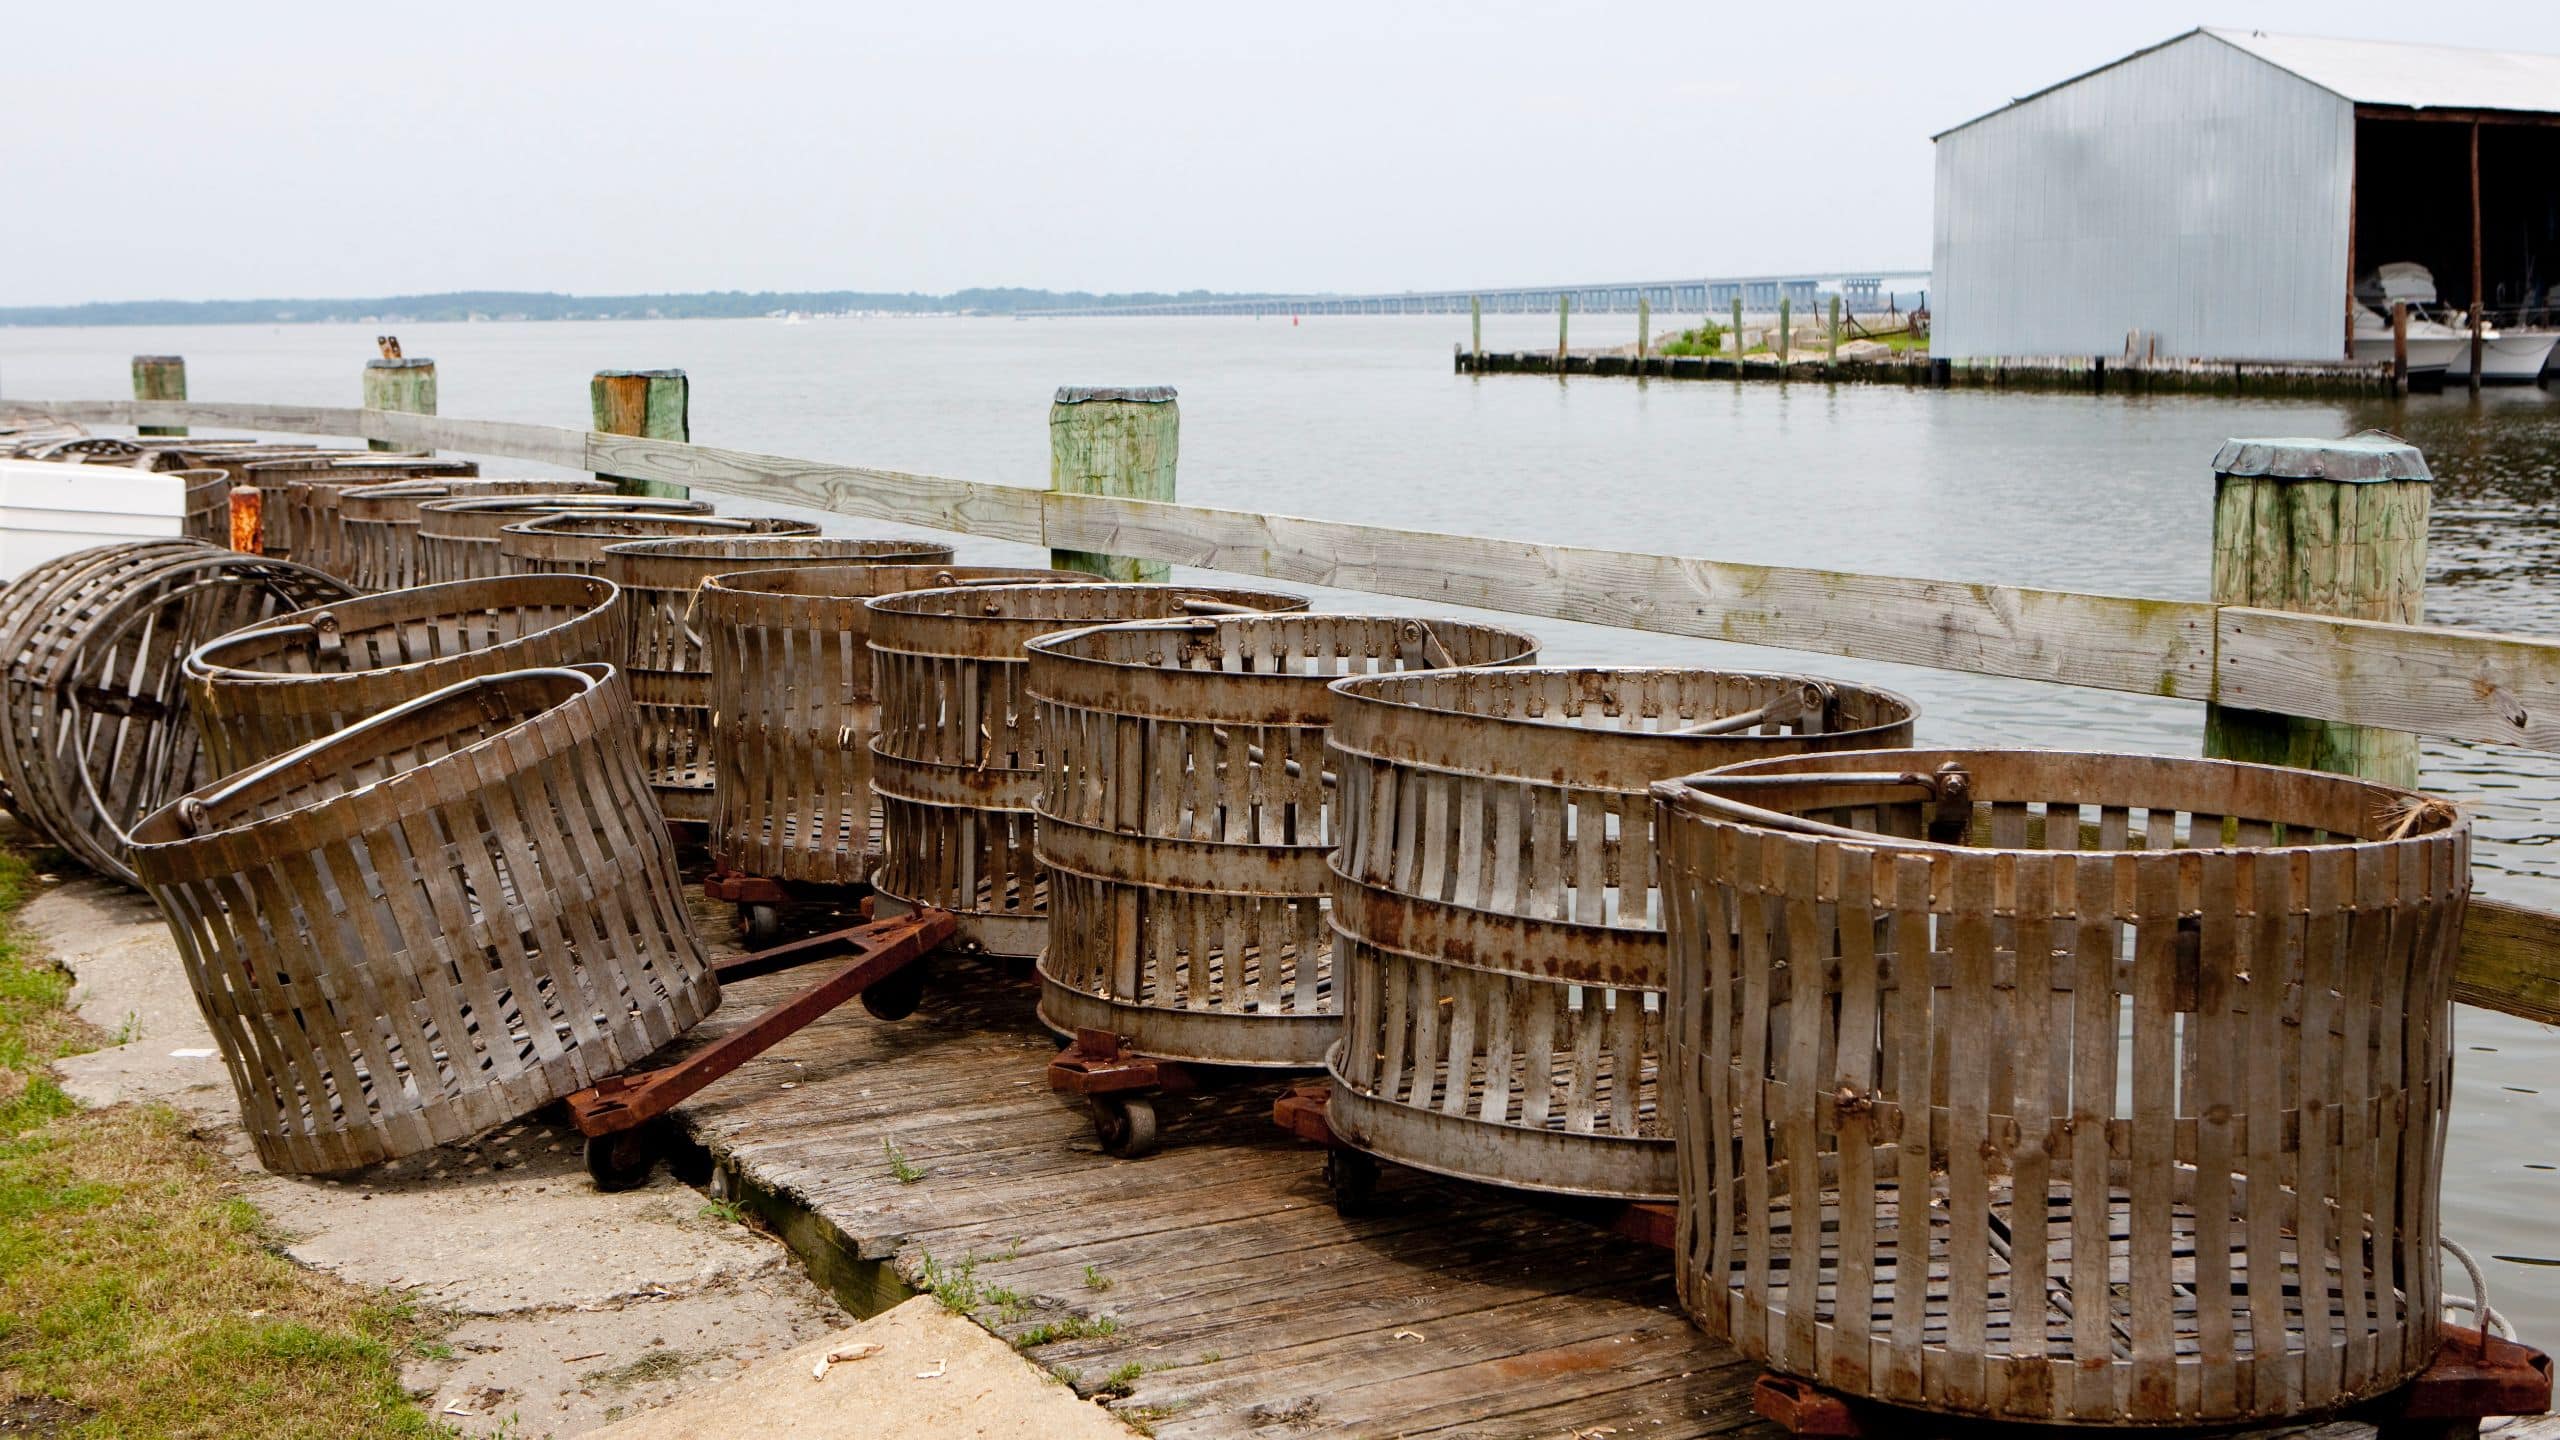 Hyatt Regency Chesapeake Bay Golf Resort, Spa and Marina Crab Baskets